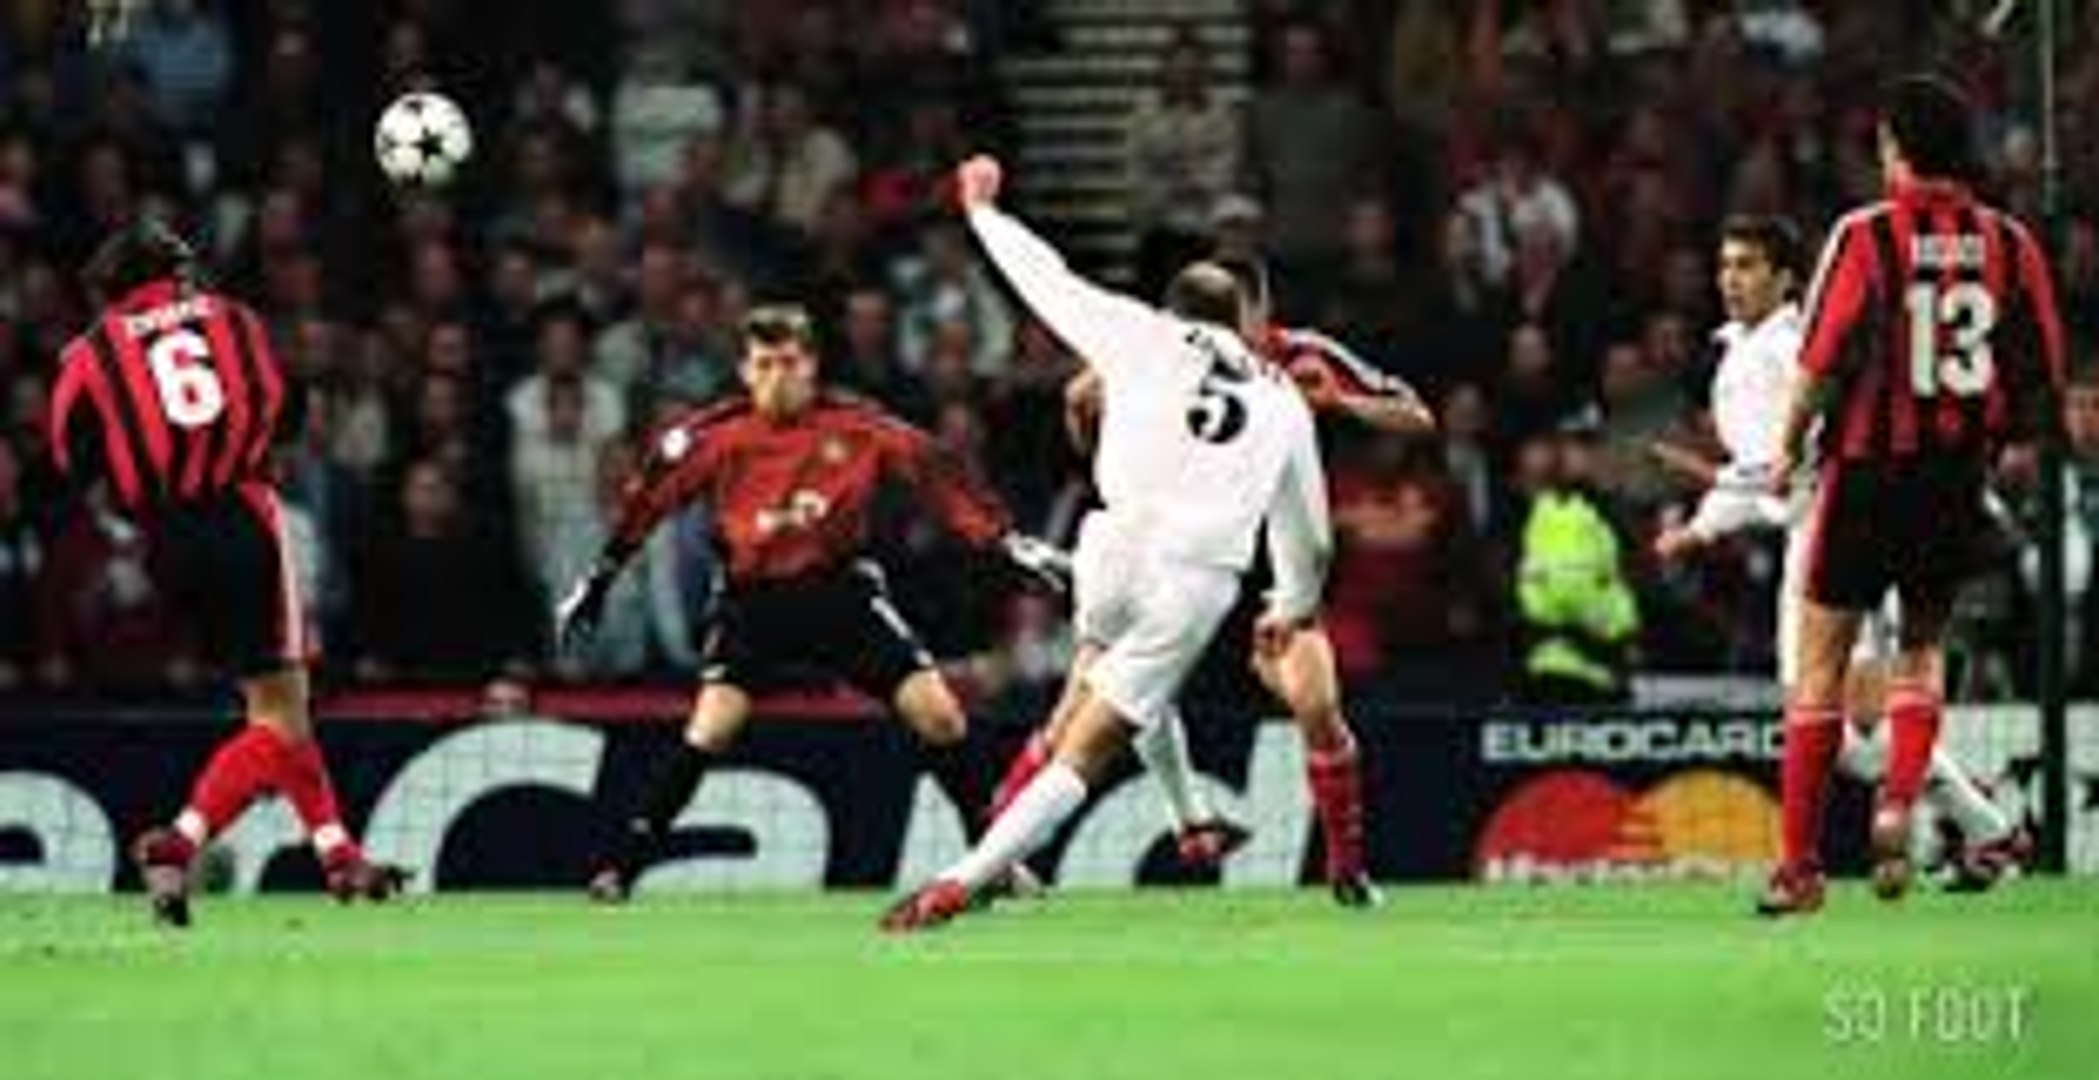 Zinedine Zidane Goal Real Madrid vs Leverkusen Champions League final 2002  - Vidéo Dailymotion